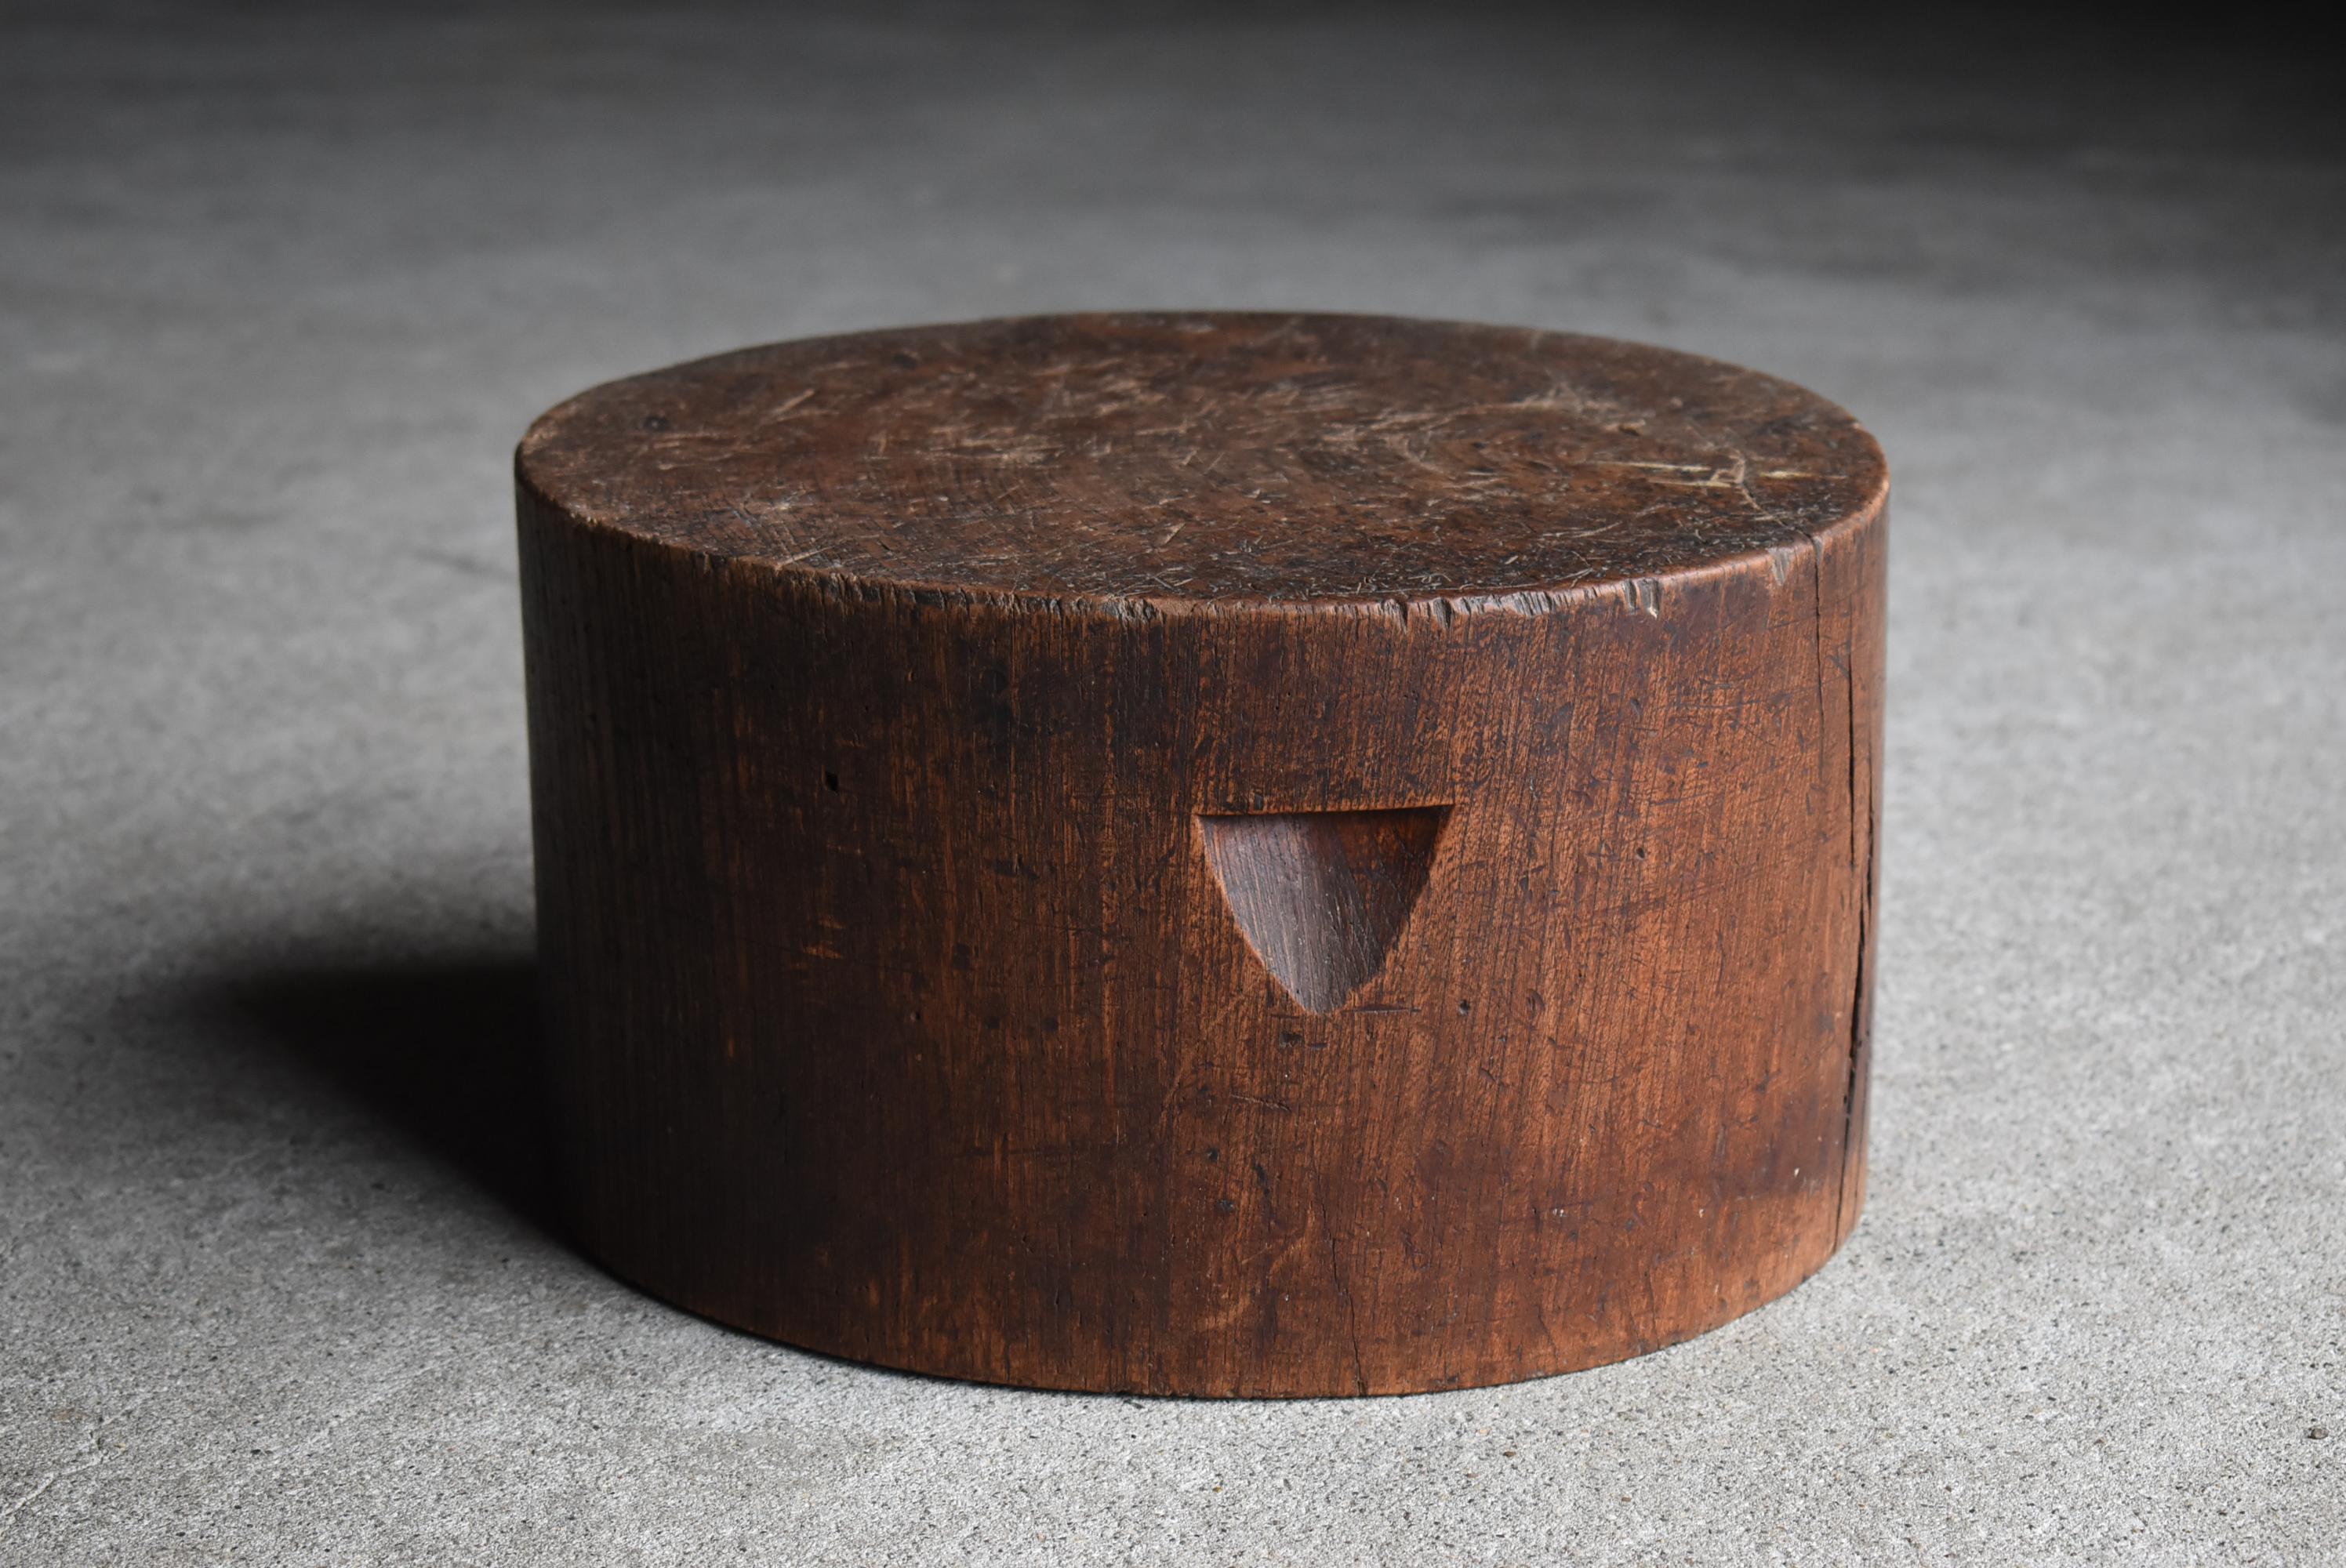 Japanese Antique Wooden Block Stool 1860s-1900s / Primitive Wabi Sabi Wood Chair 5